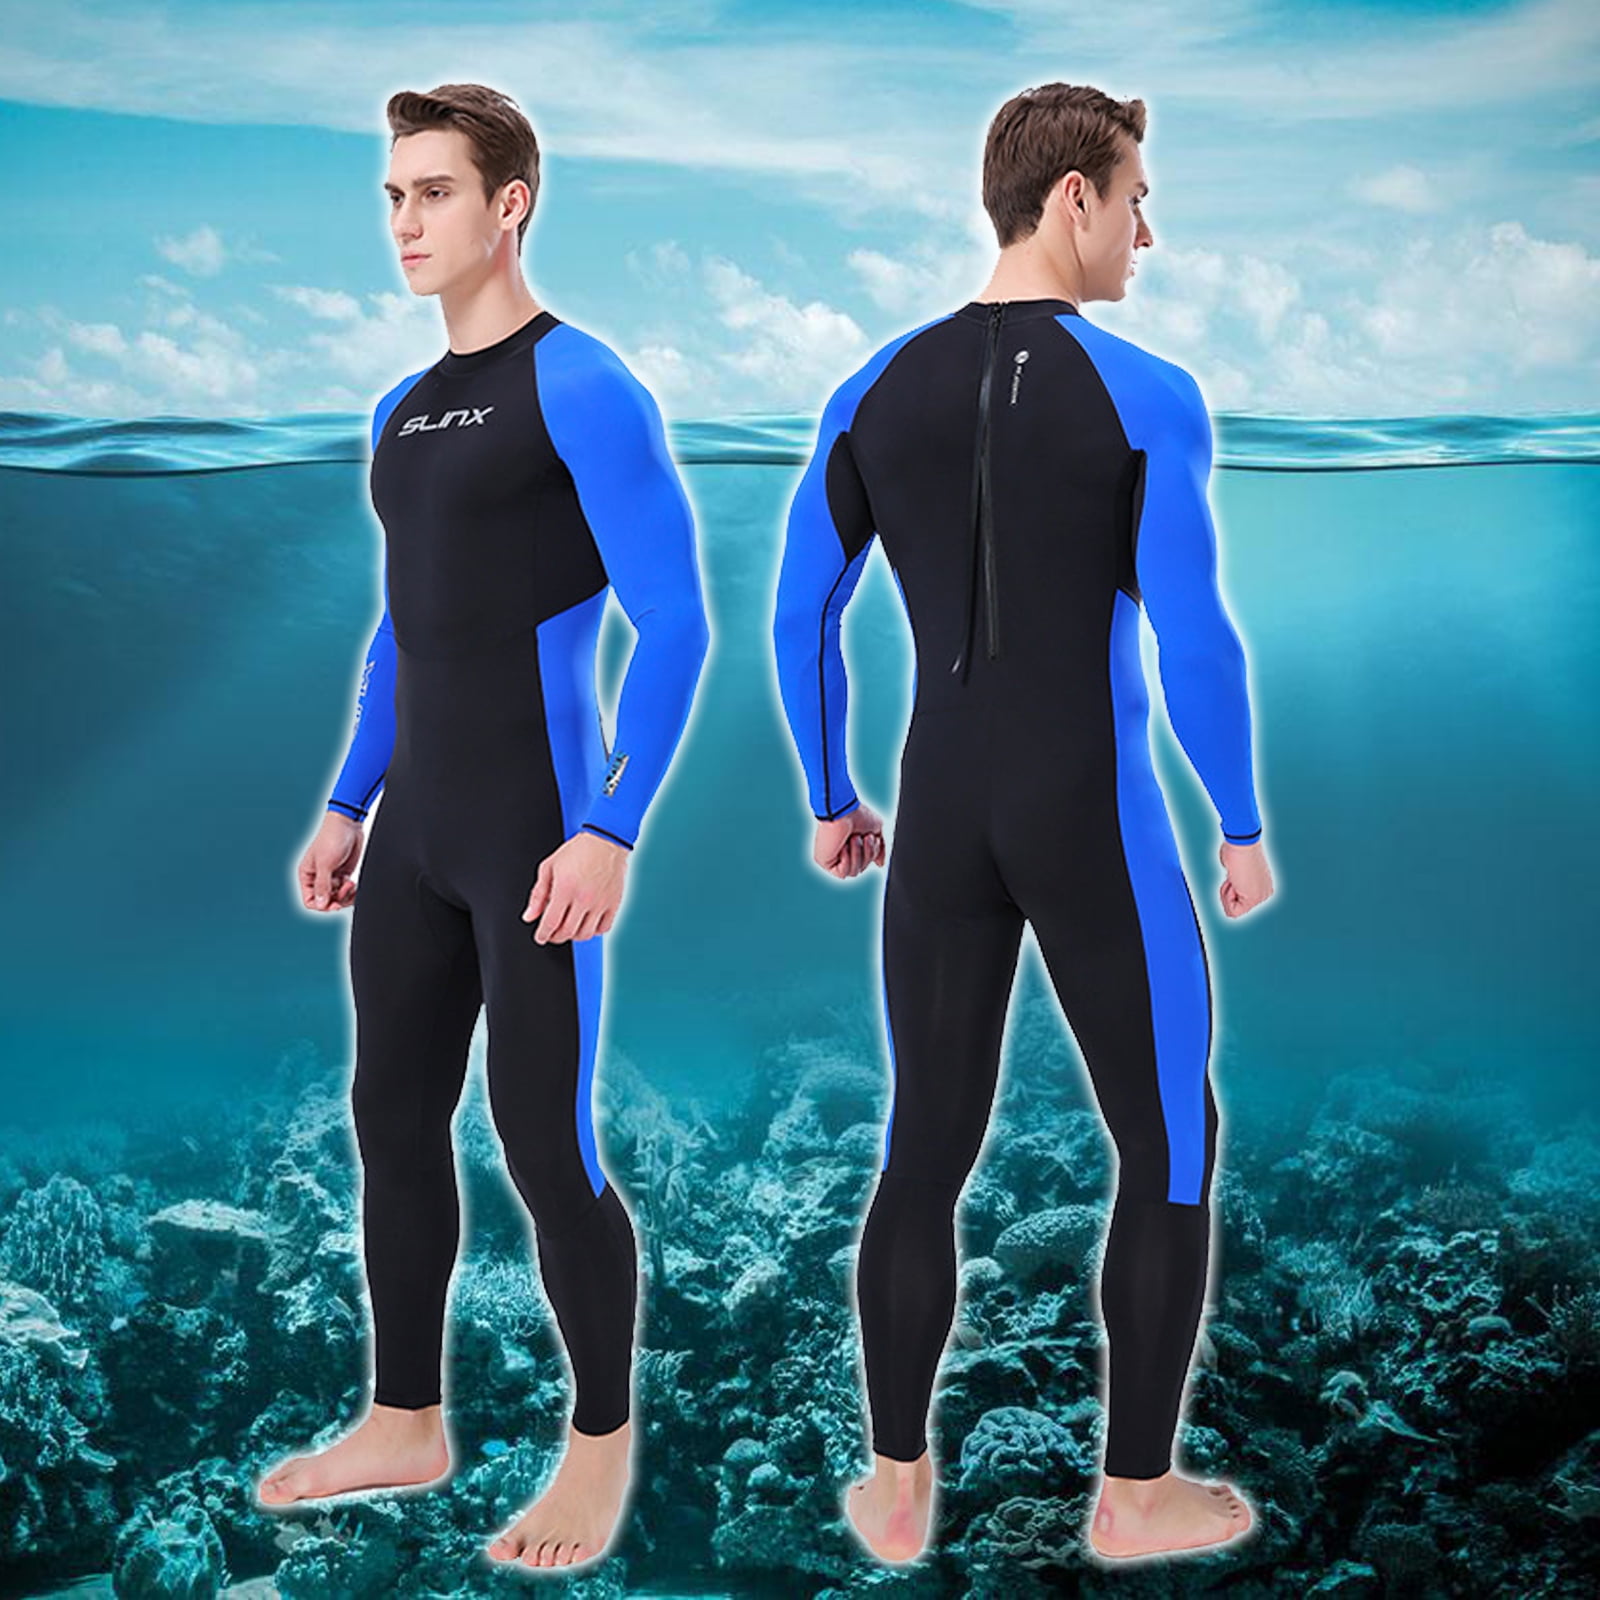 Camouflage Surf Freedive Full Body Swimwear Wetsuit Diving Skin Suit Rashguard 